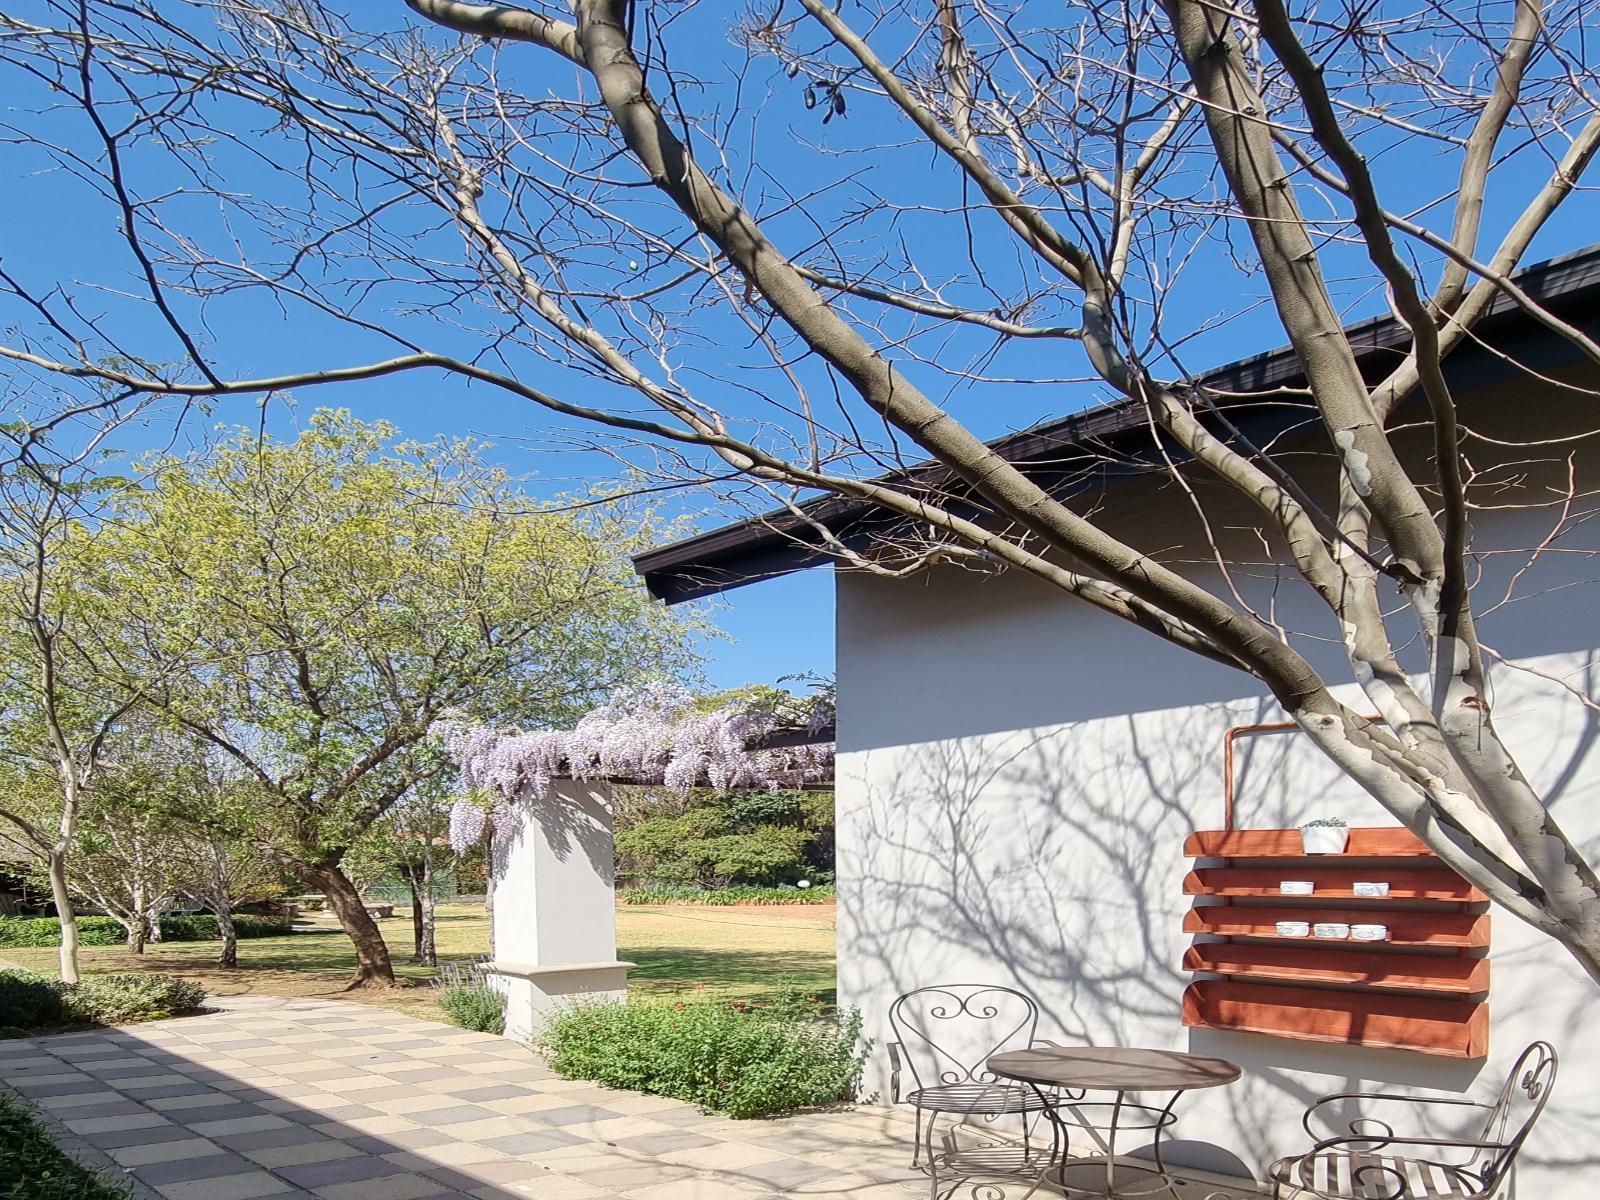 Bergliot Guest House Eastleigh Ridge Johannesburg Gauteng South Africa Blossom, Plant, Nature, Pavilion, Architecture